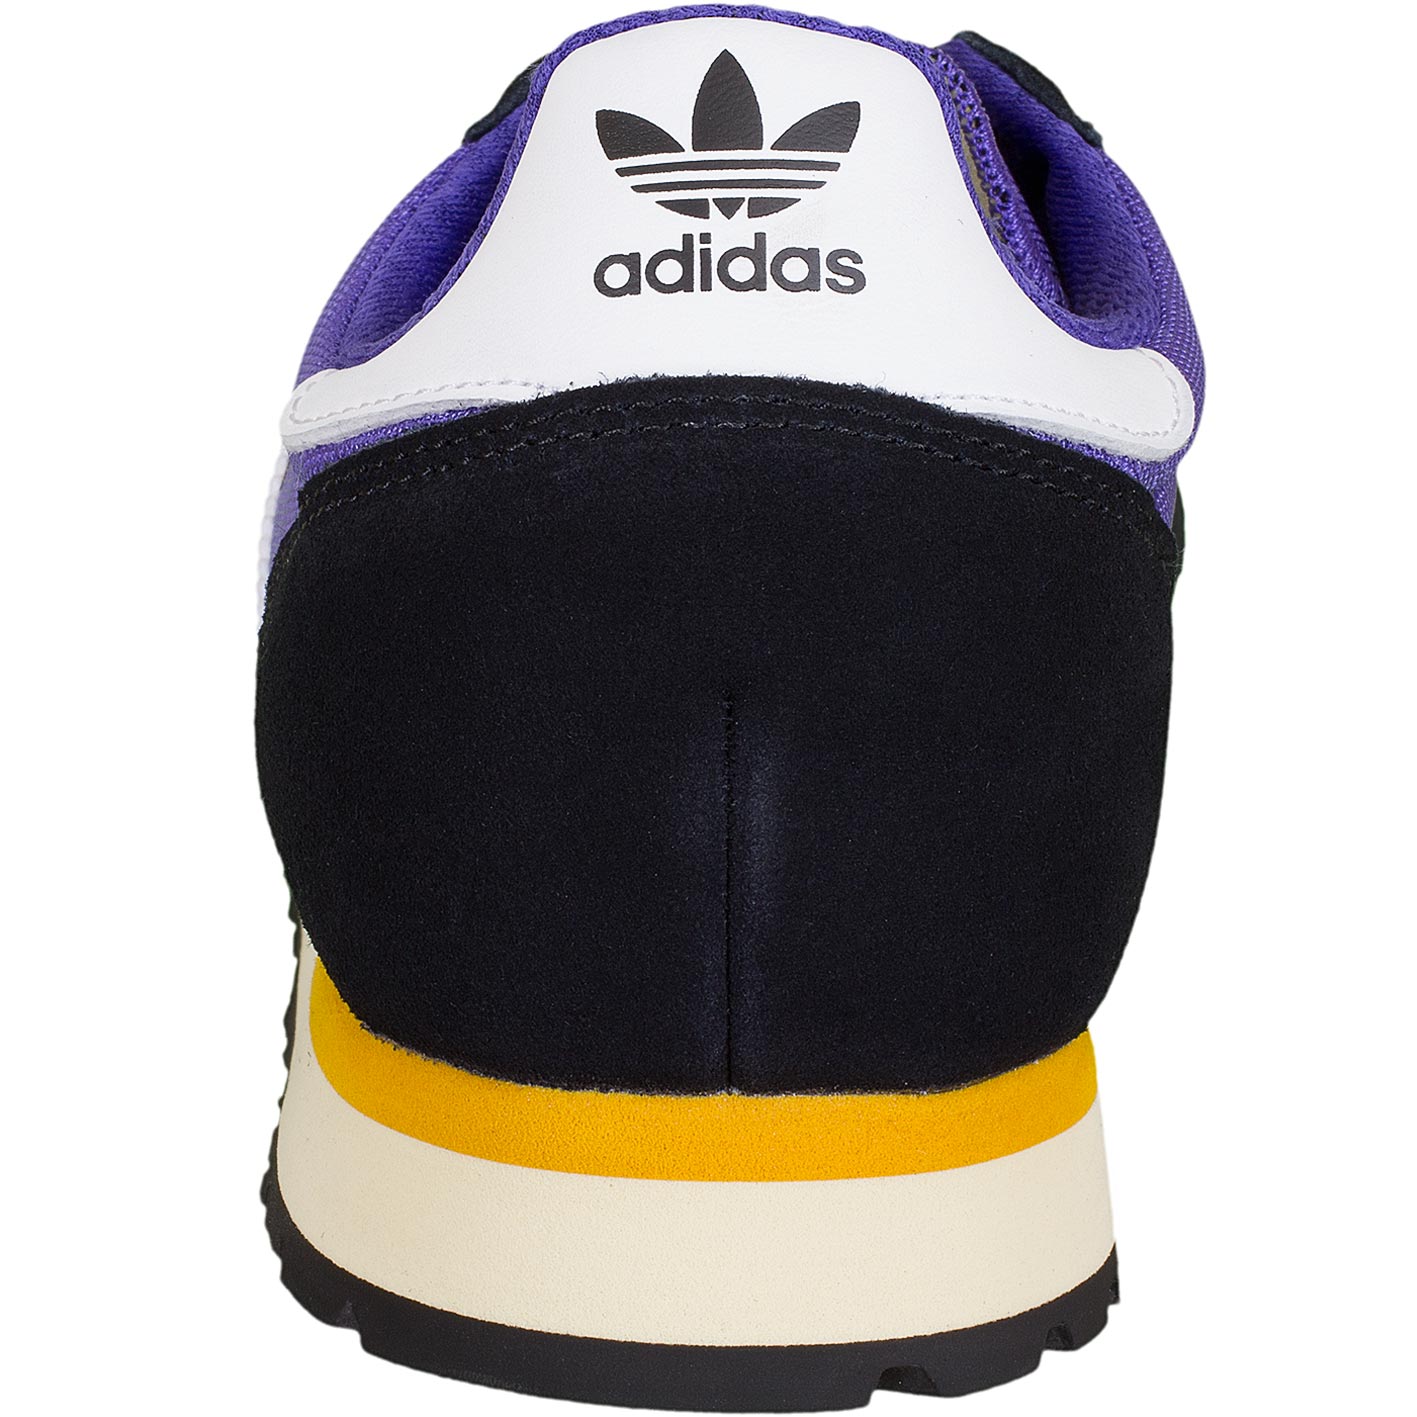 ☆ Adidas Originals Sneaker Haven lila/weiß/schwarz - hier bestellen!